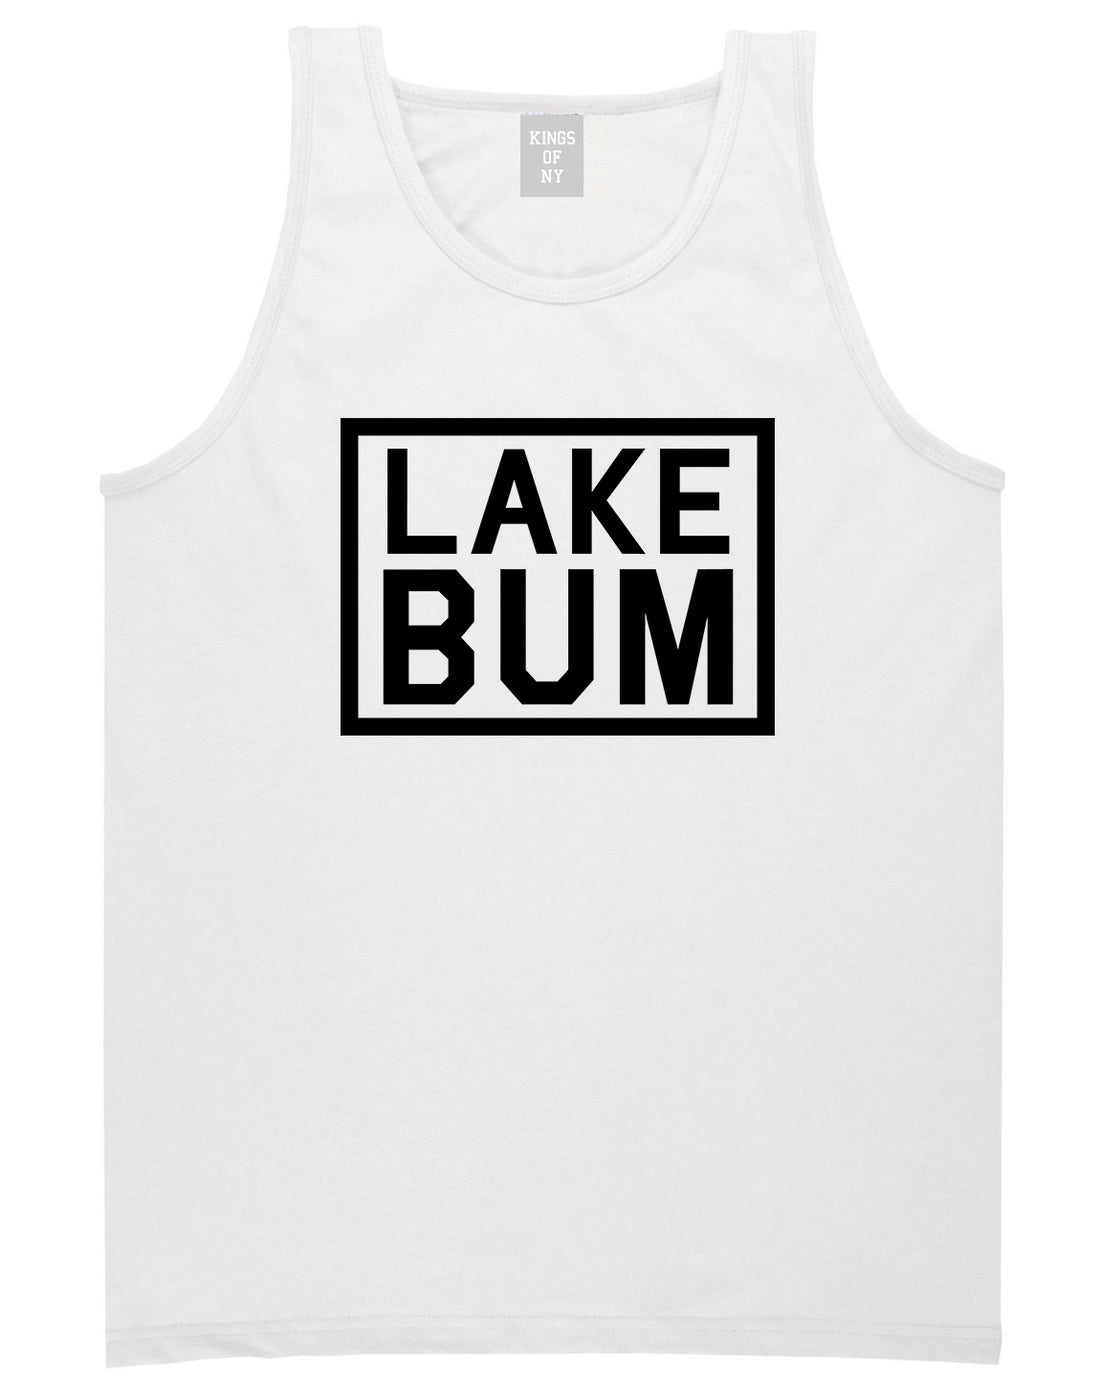 Lake Bum Box Mens Tank Top Shirt White